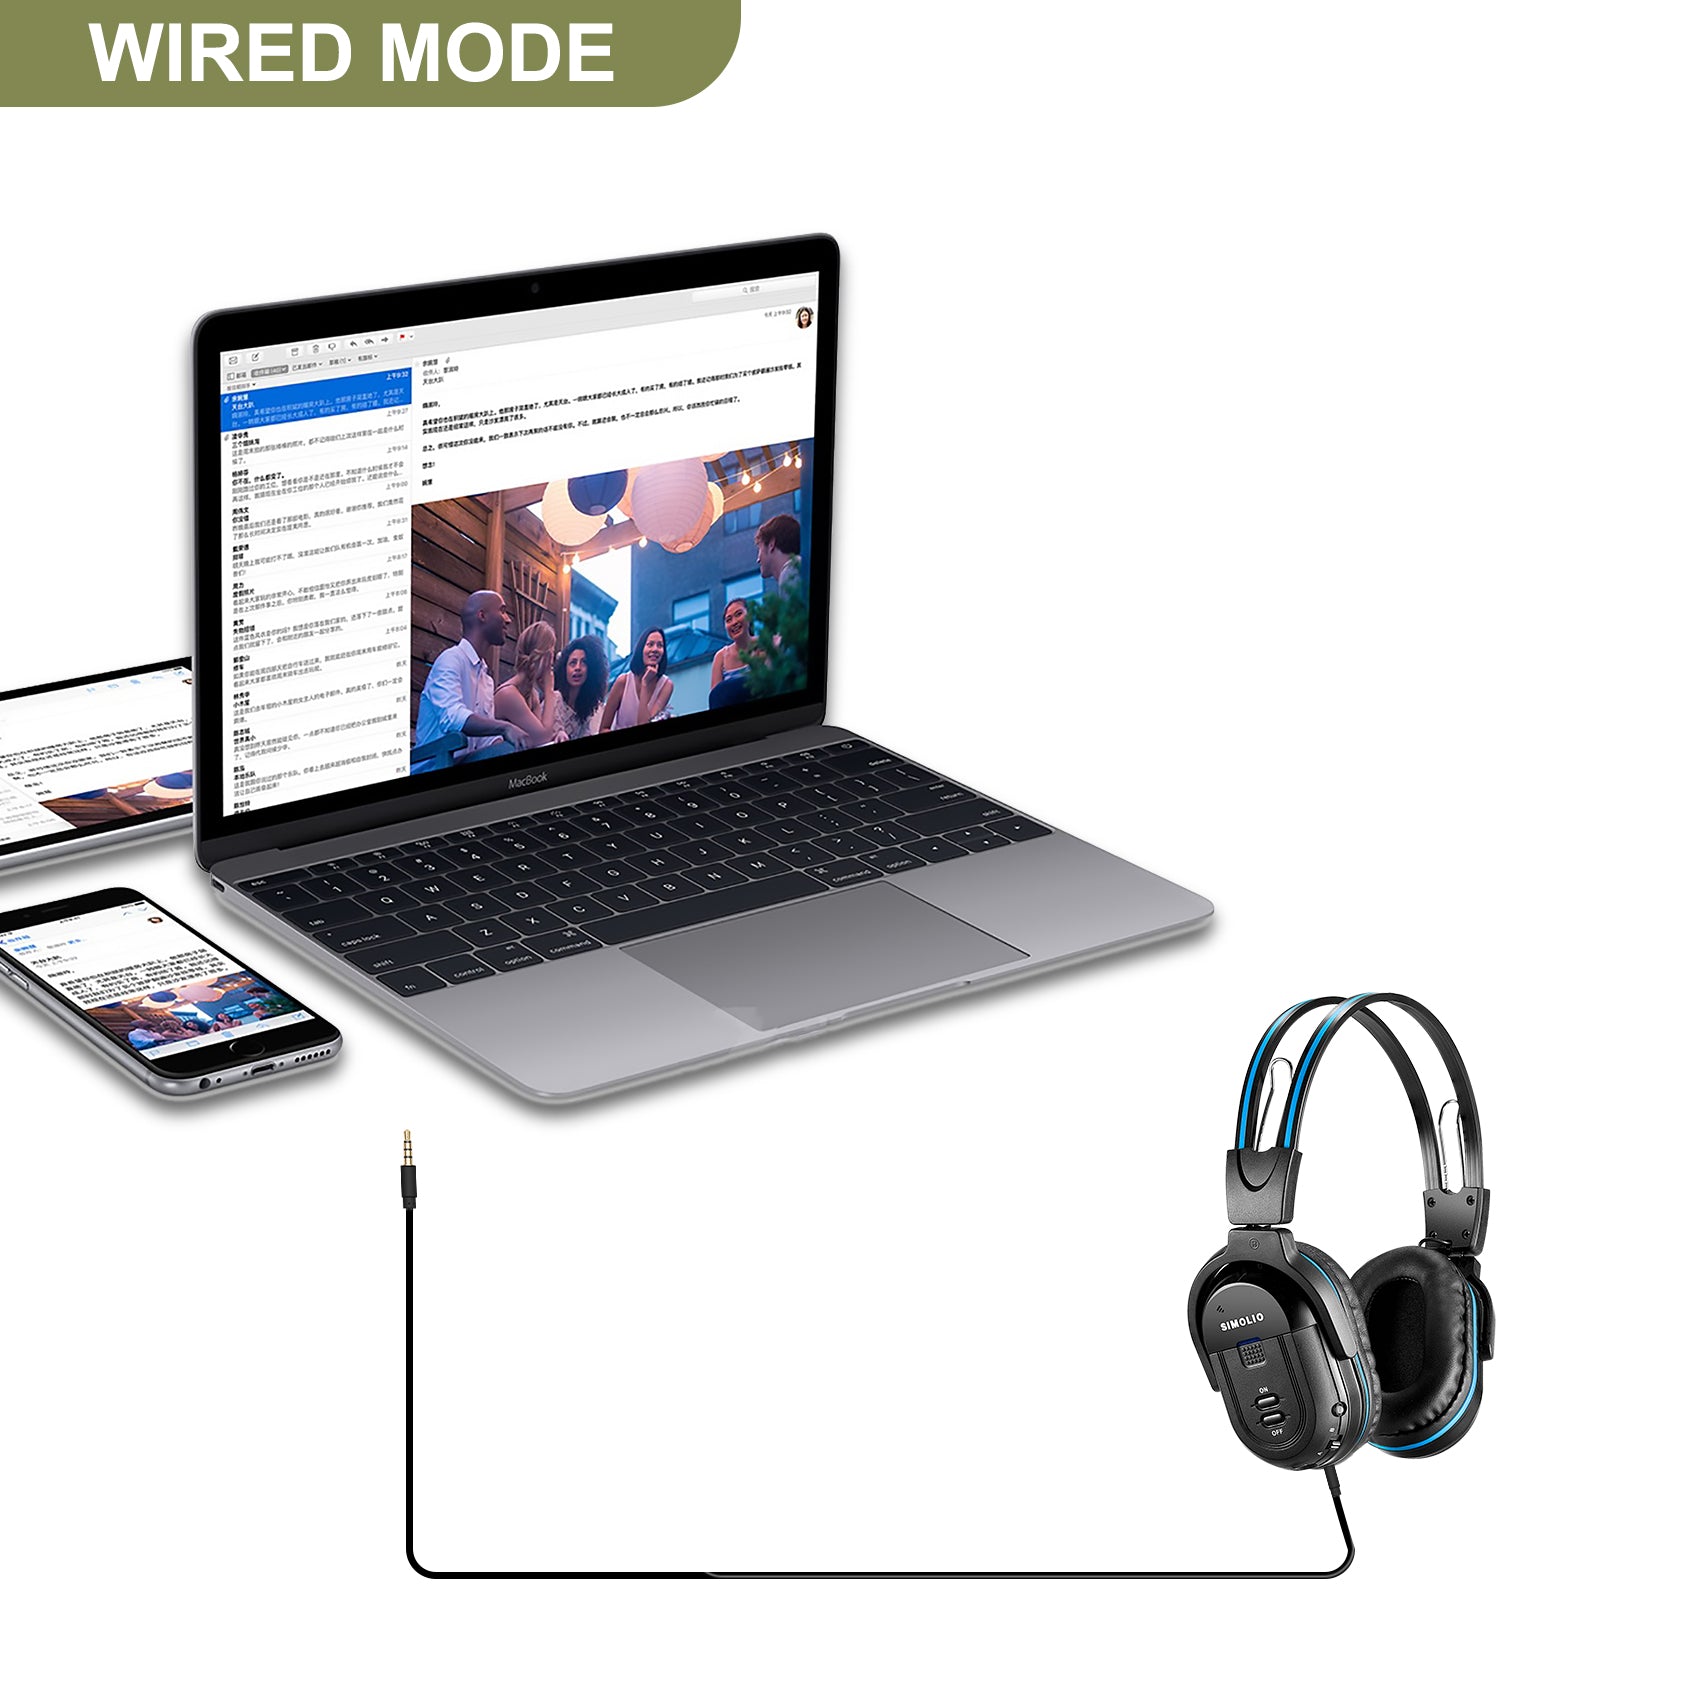 SIMOLIO-Wireless-headphones-for-TV-wired-mode-4pack